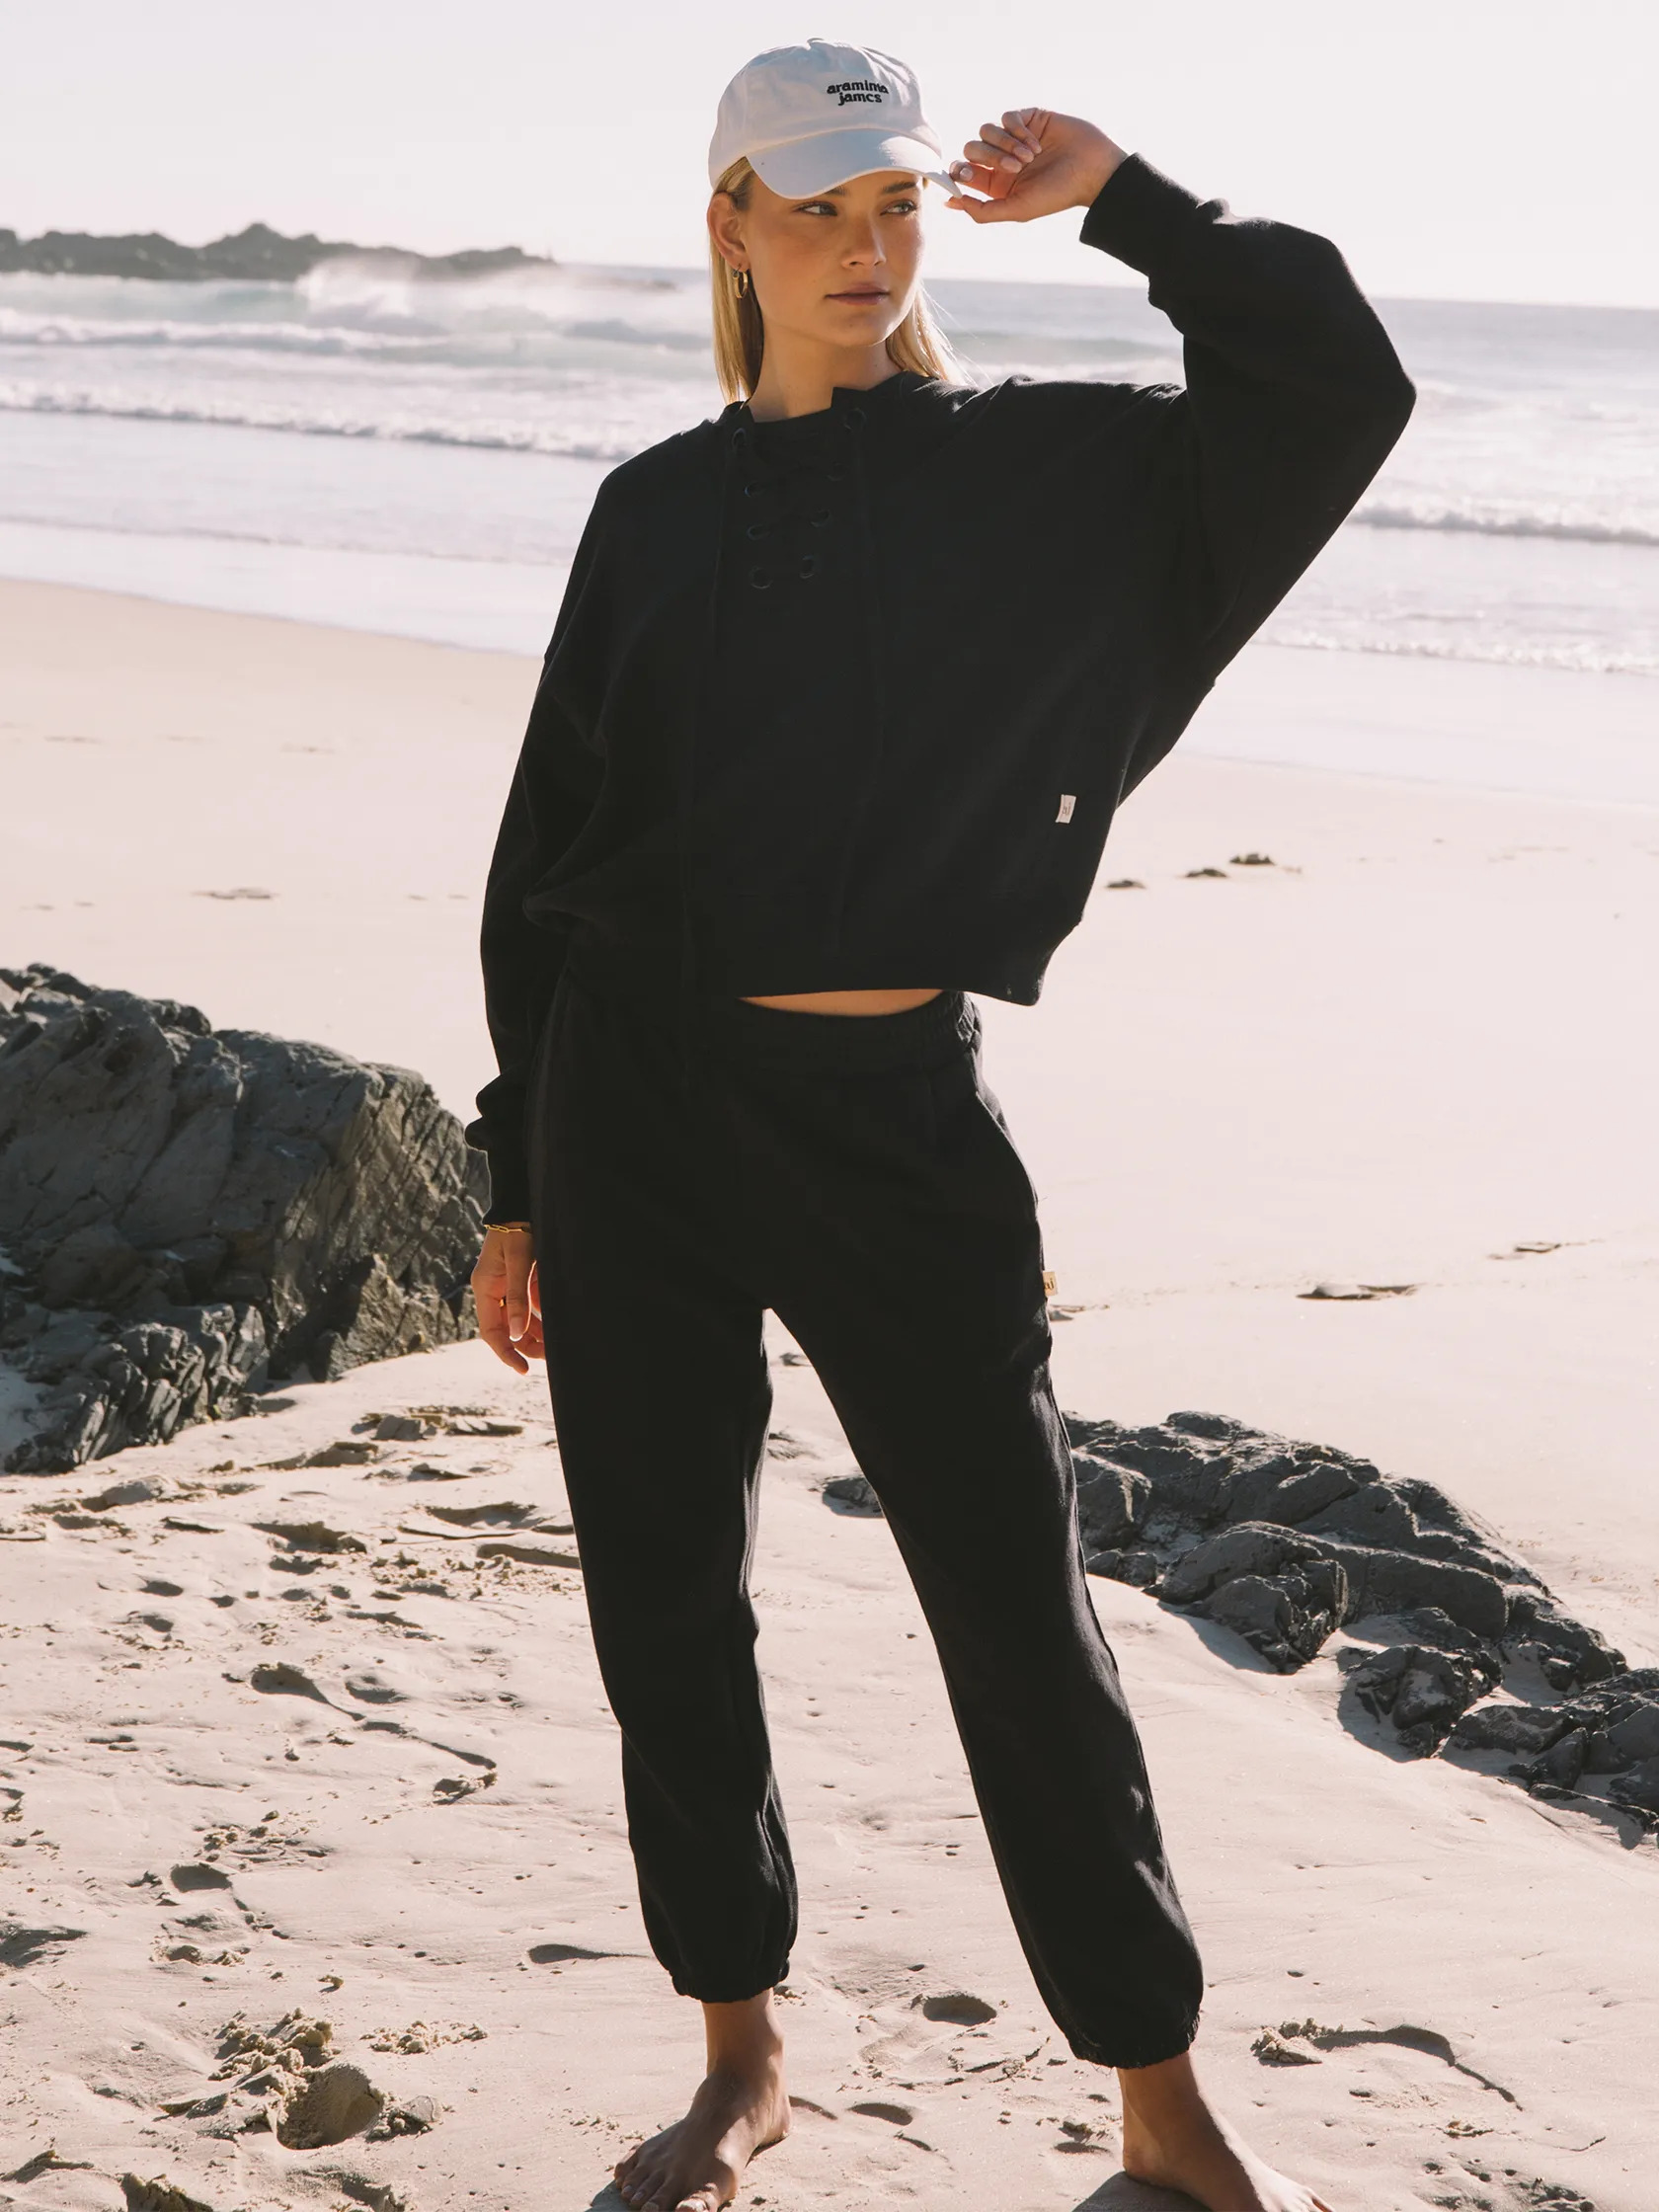 A model on the beach wearing a matching black crewneck sweat set from FashionPass.